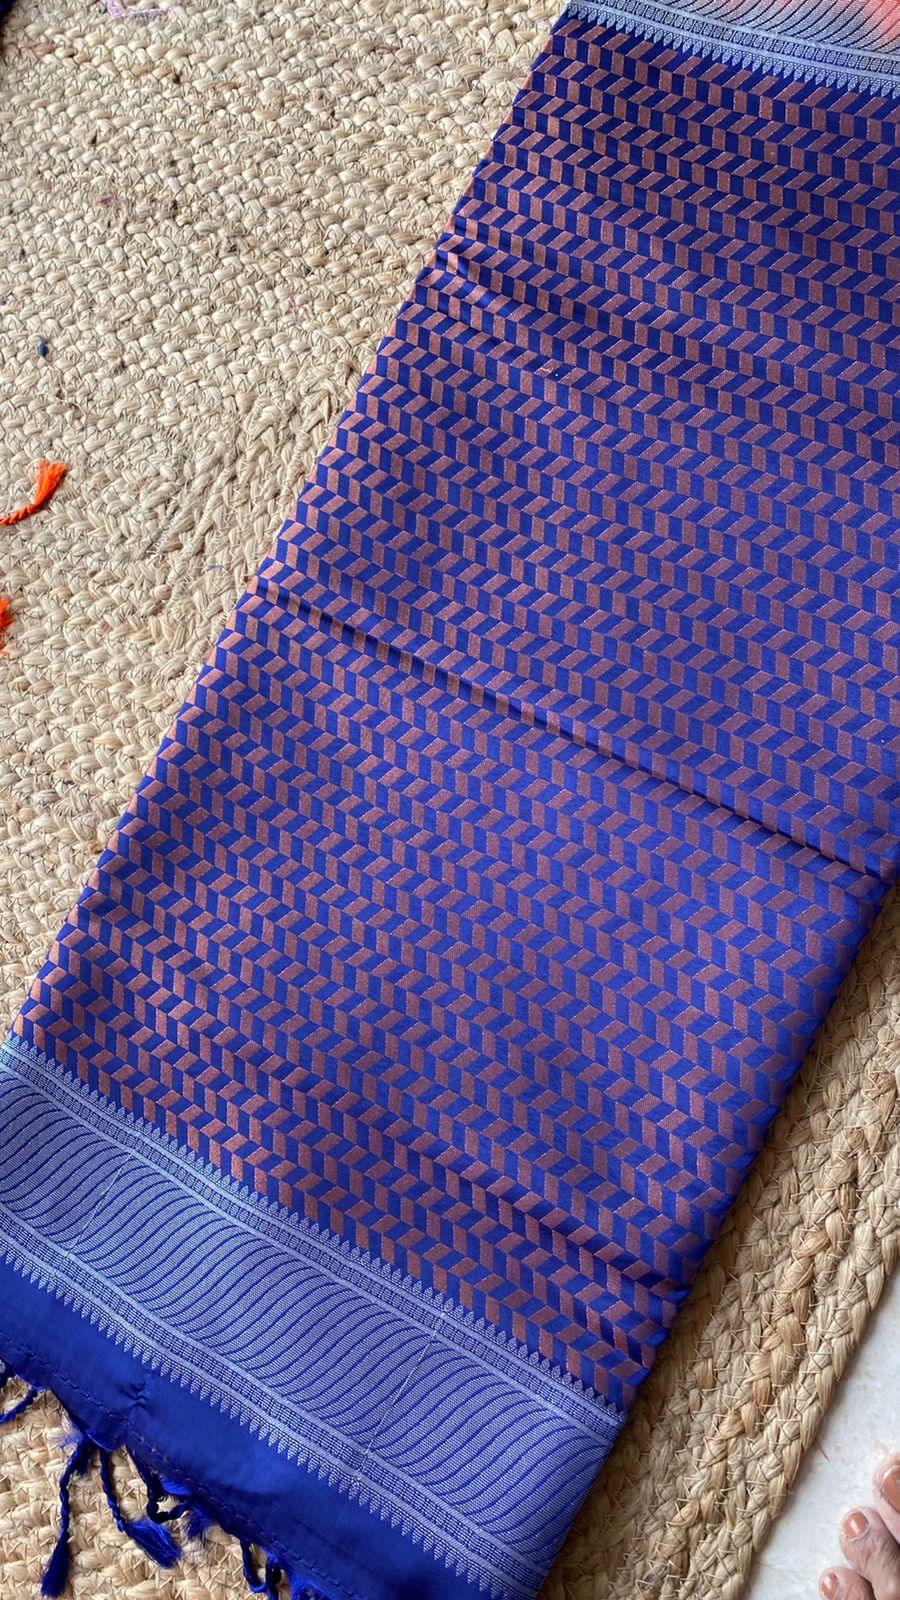 Orange and Purple Silk saree with blouse - Threads